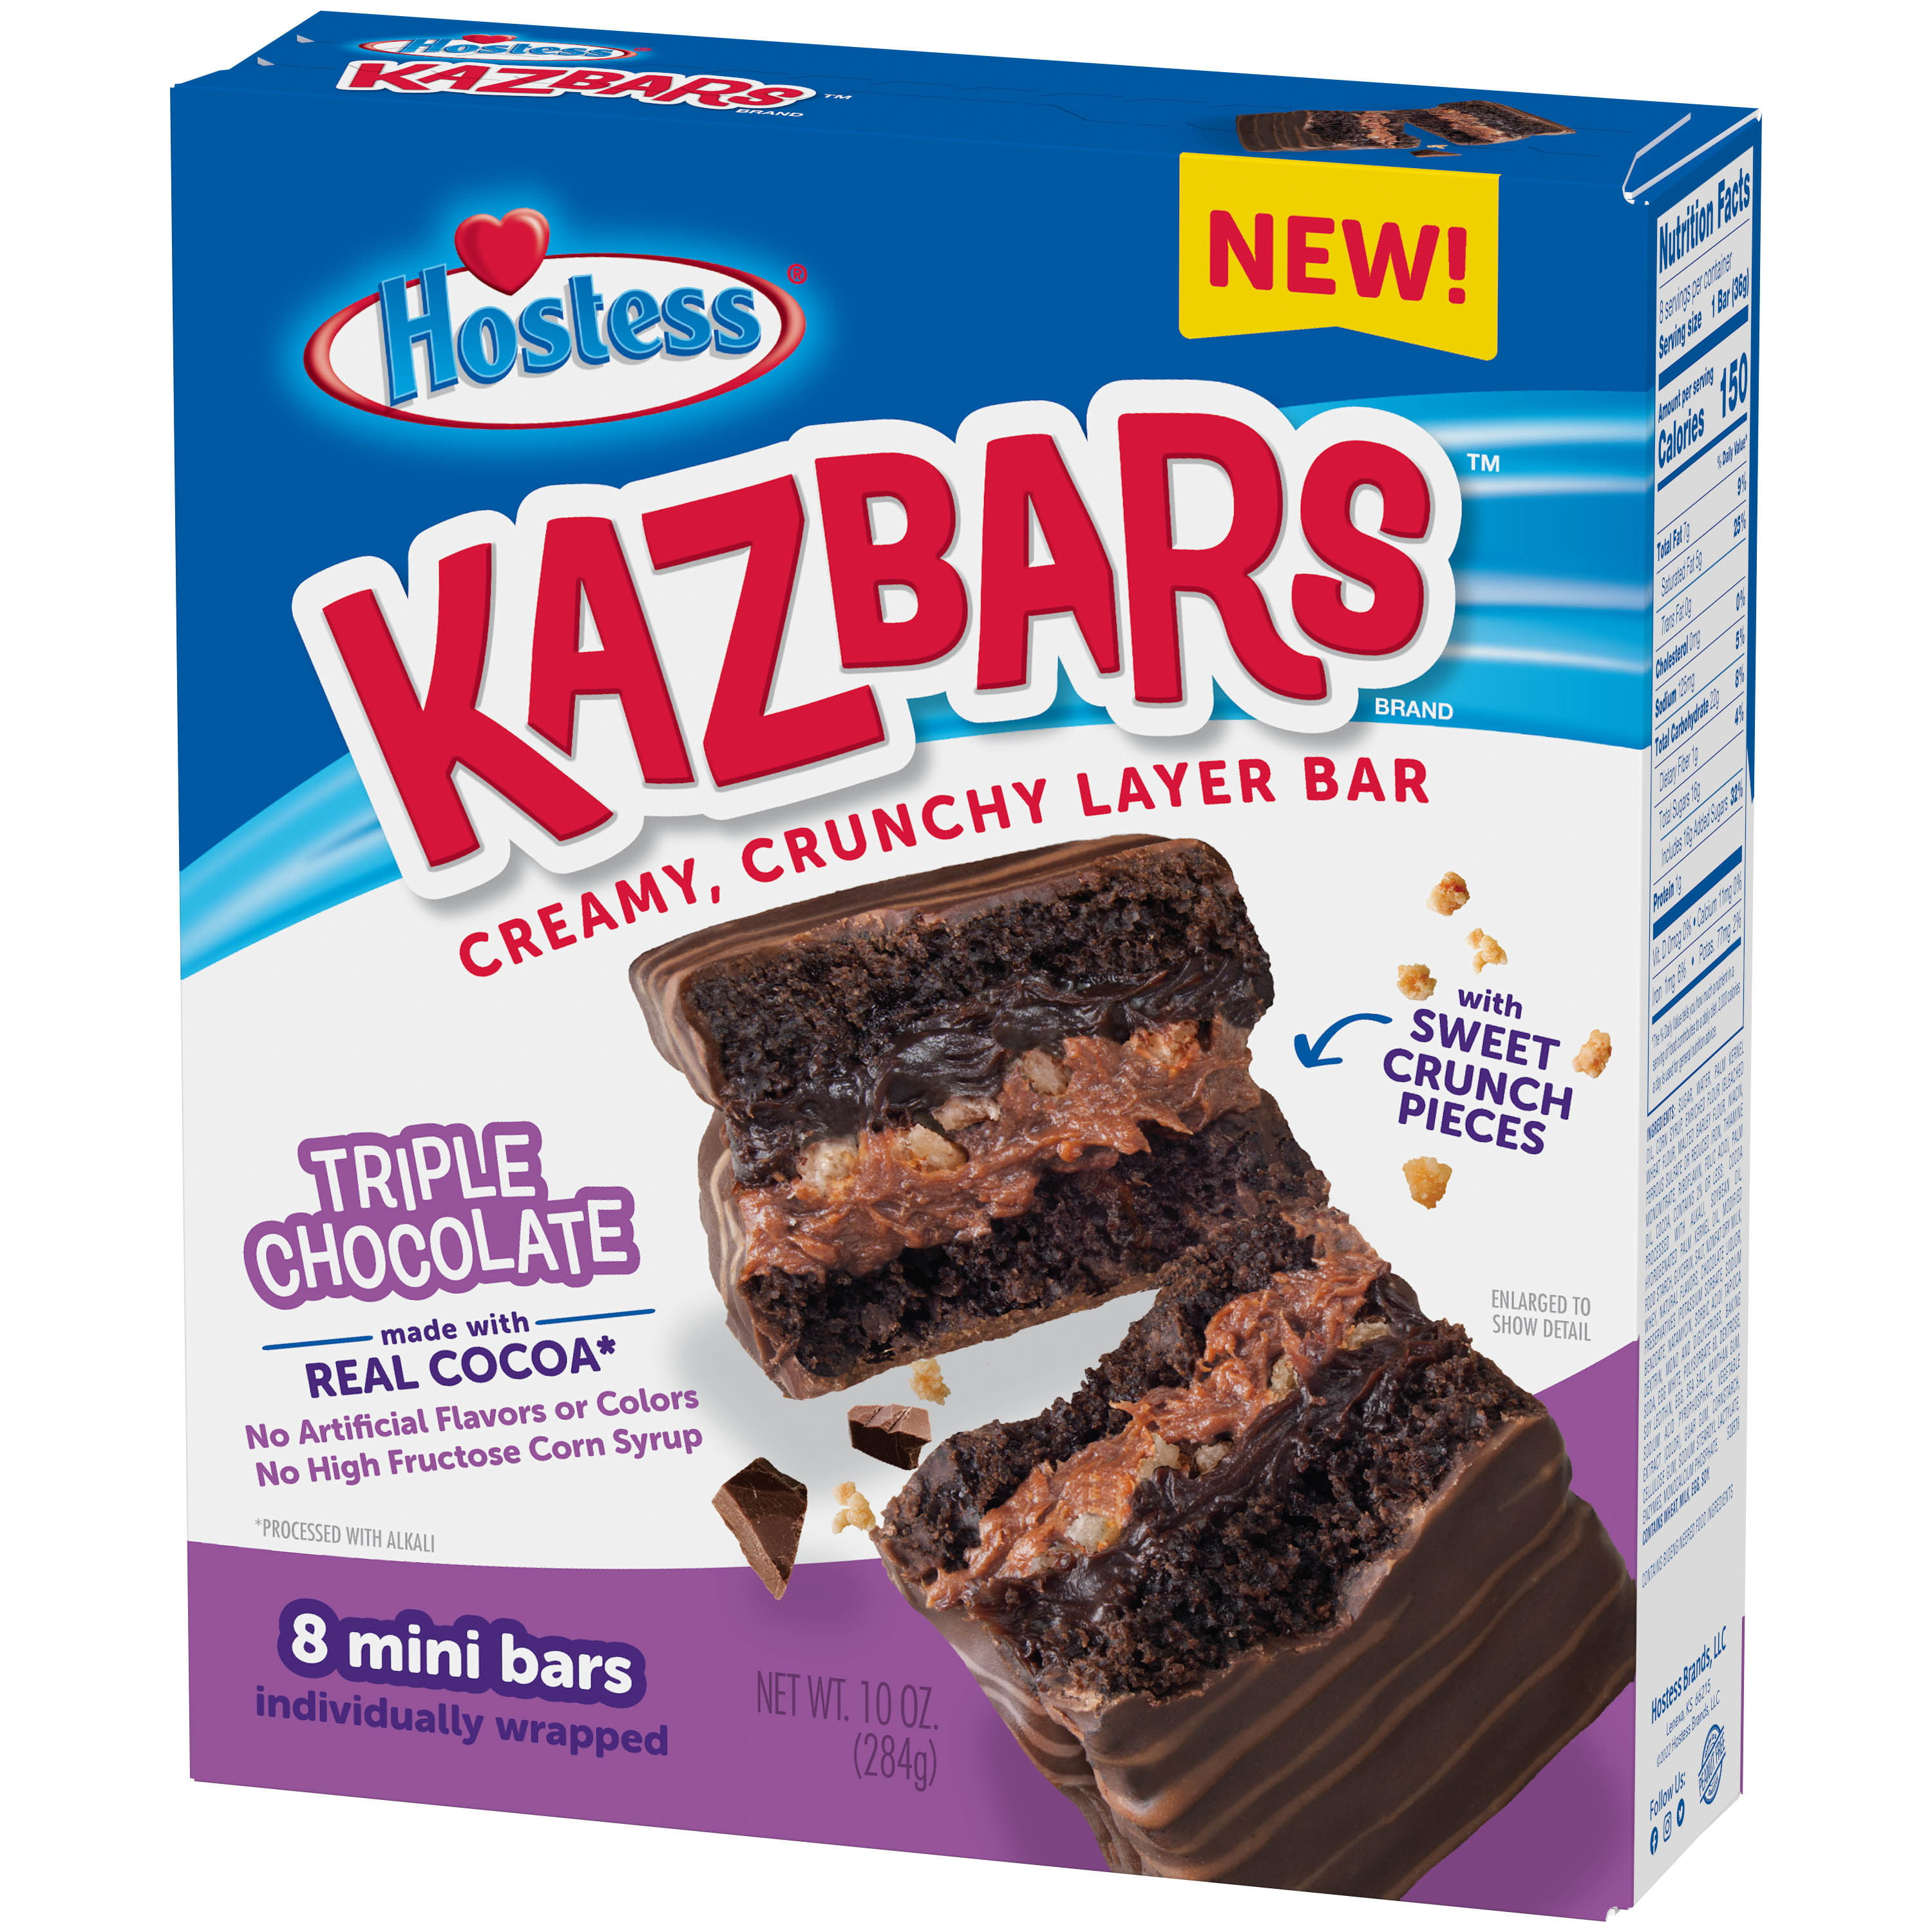 HOSTESS Triple Chocolate KAZBARS Creamy and Crunchy Layer Bar